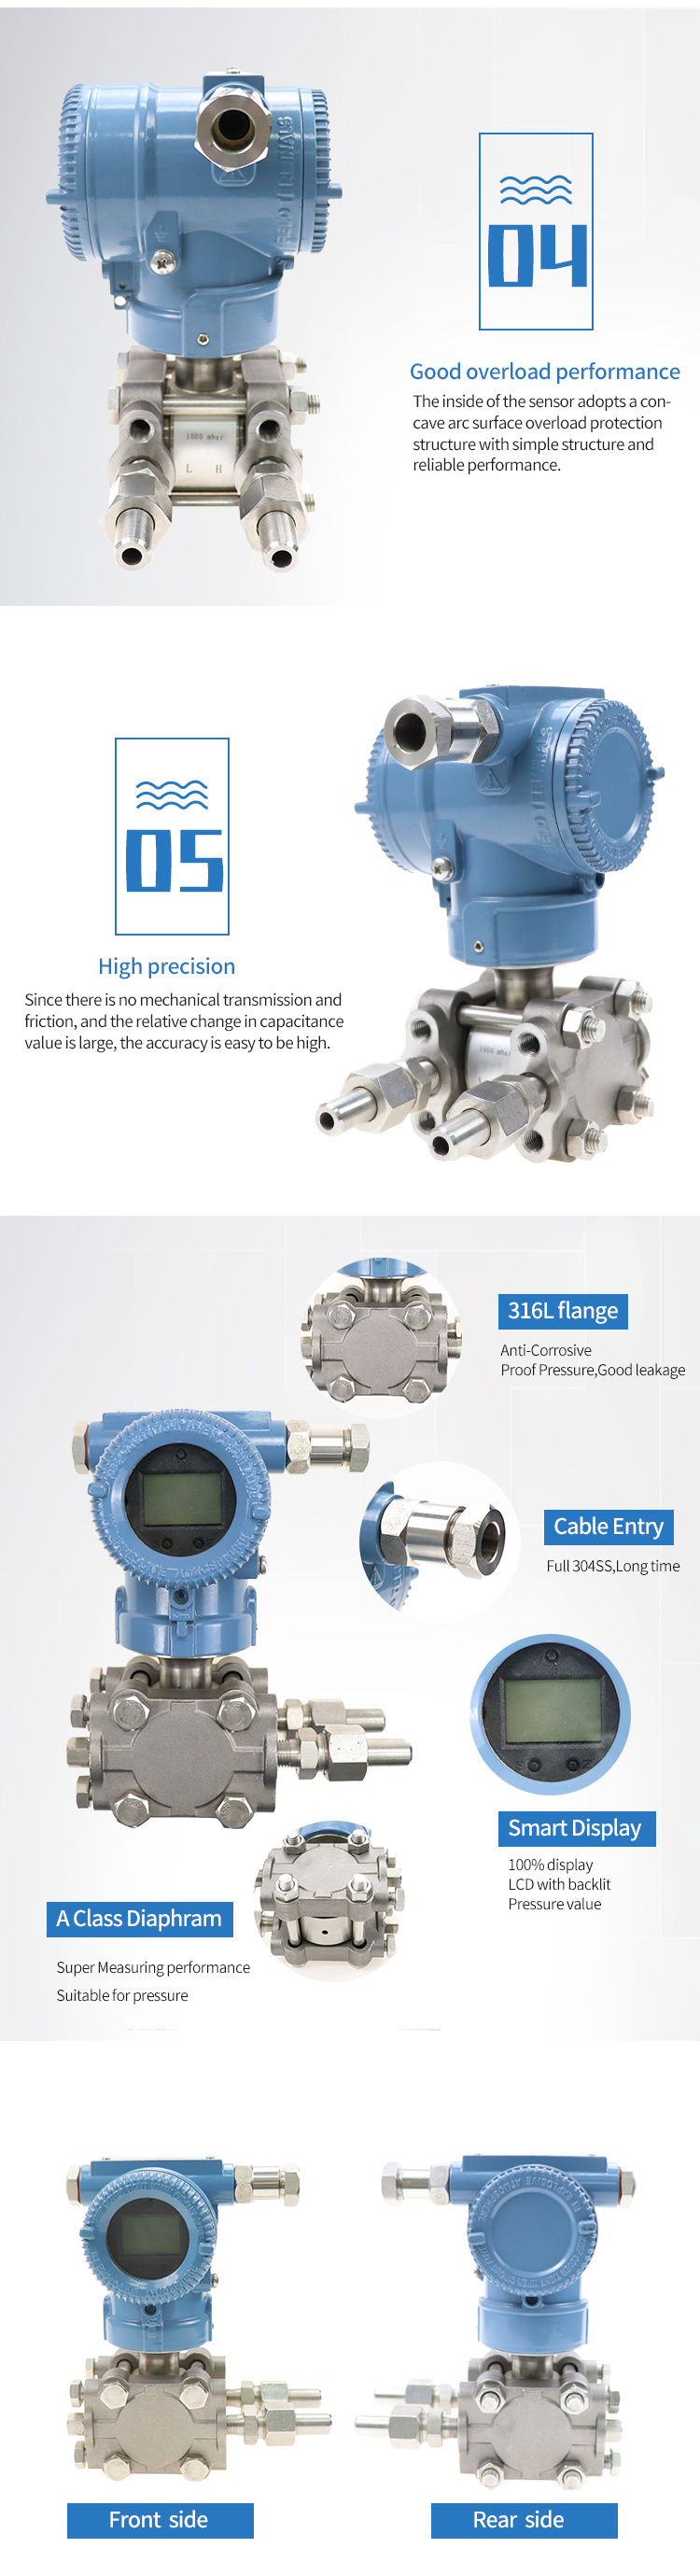 3051 Differential Pressure Sensor 4-20mA Differential Pressure Sensor Differential Pressure Sensor Oxygen